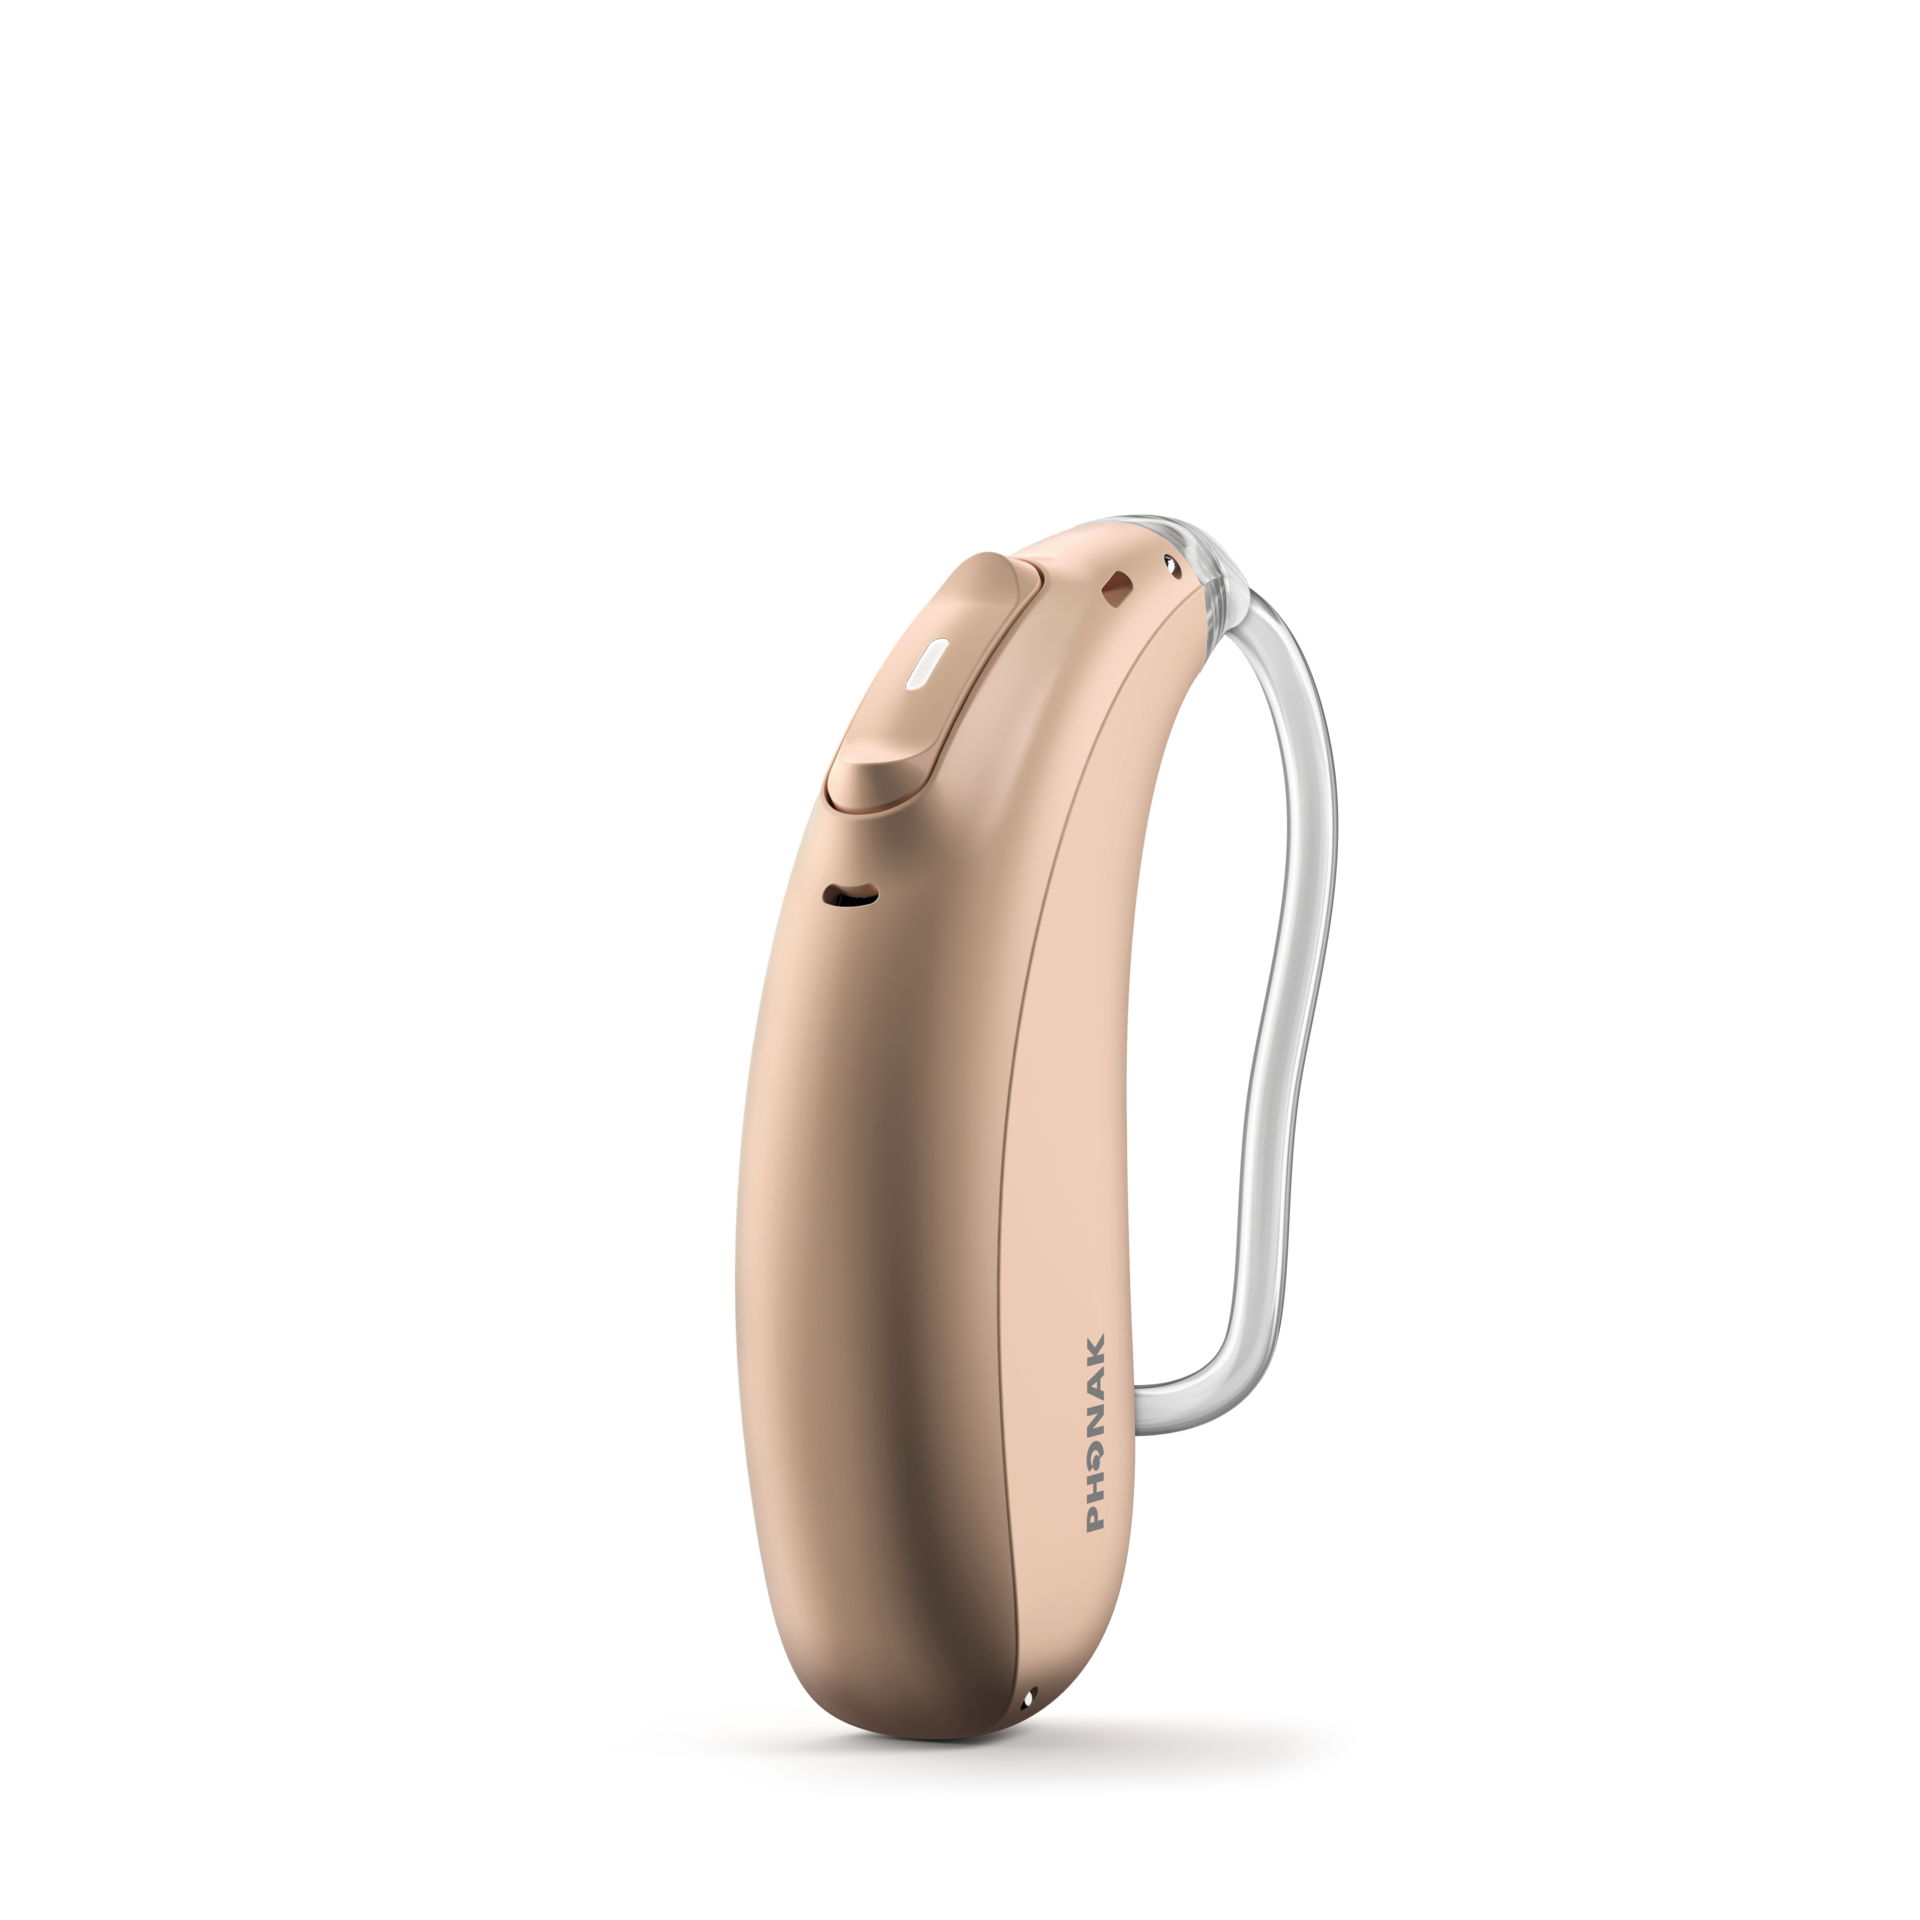 Phona Bolero M-PR hearing aid